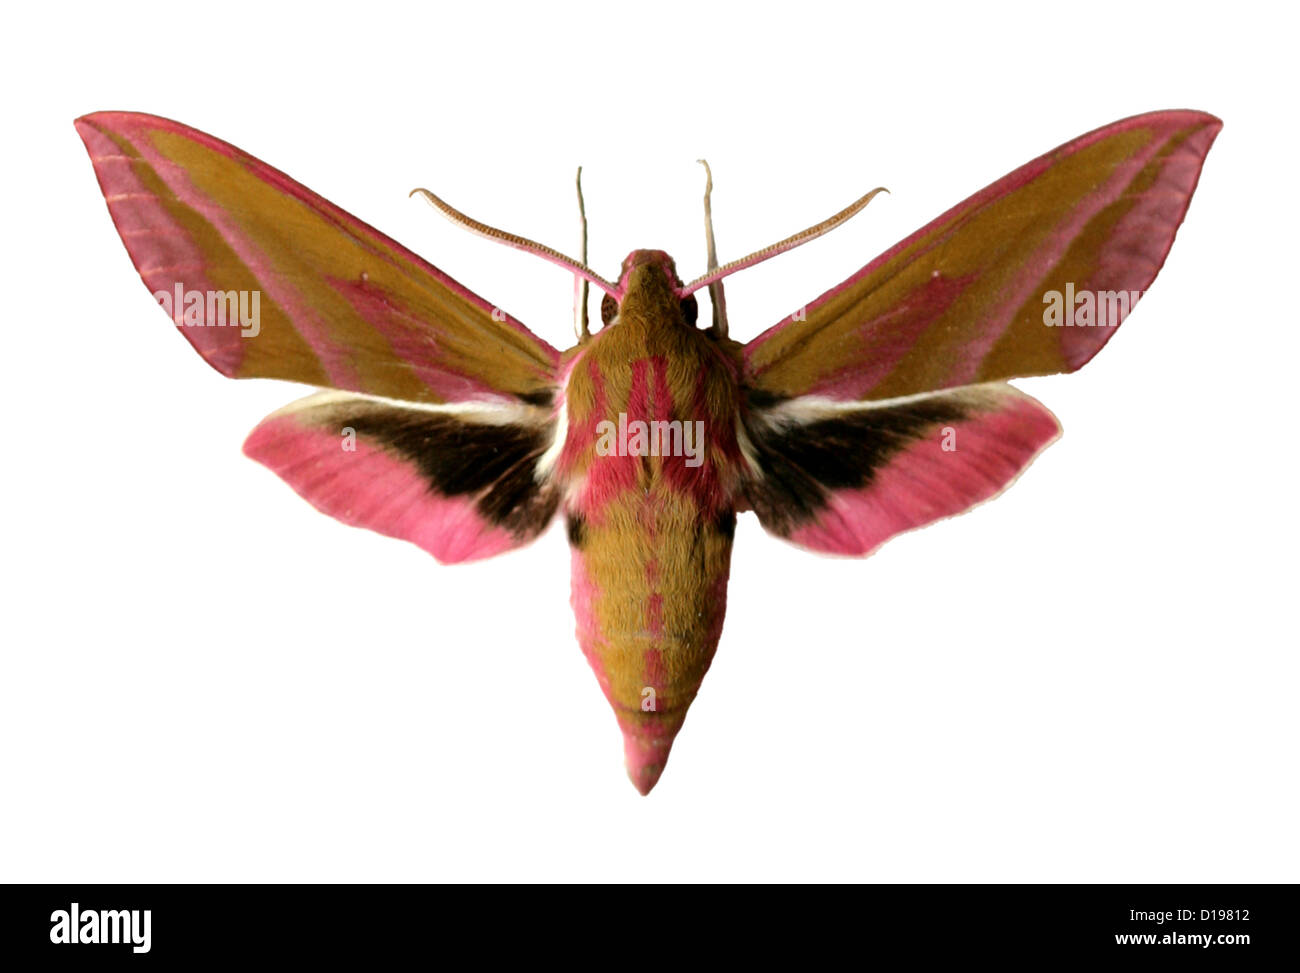 Elephant Hawk-moth, Deilephila elpenor, Macroglossinae, Sphingidae. Foto Stock